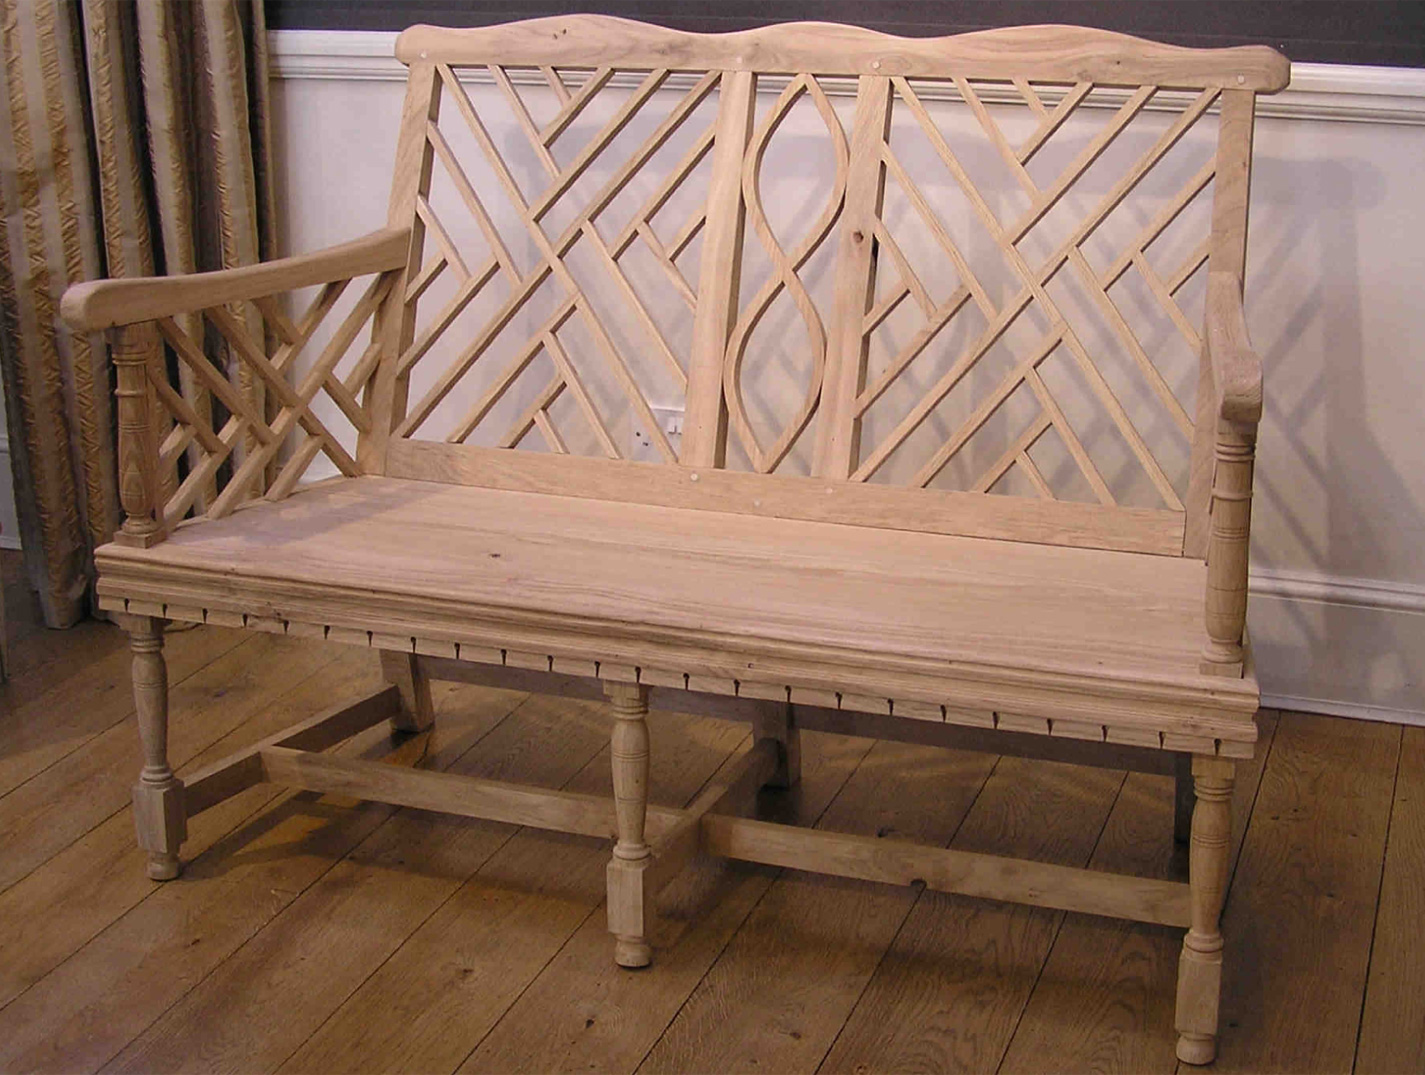 Lutyens style two seater garden bench.